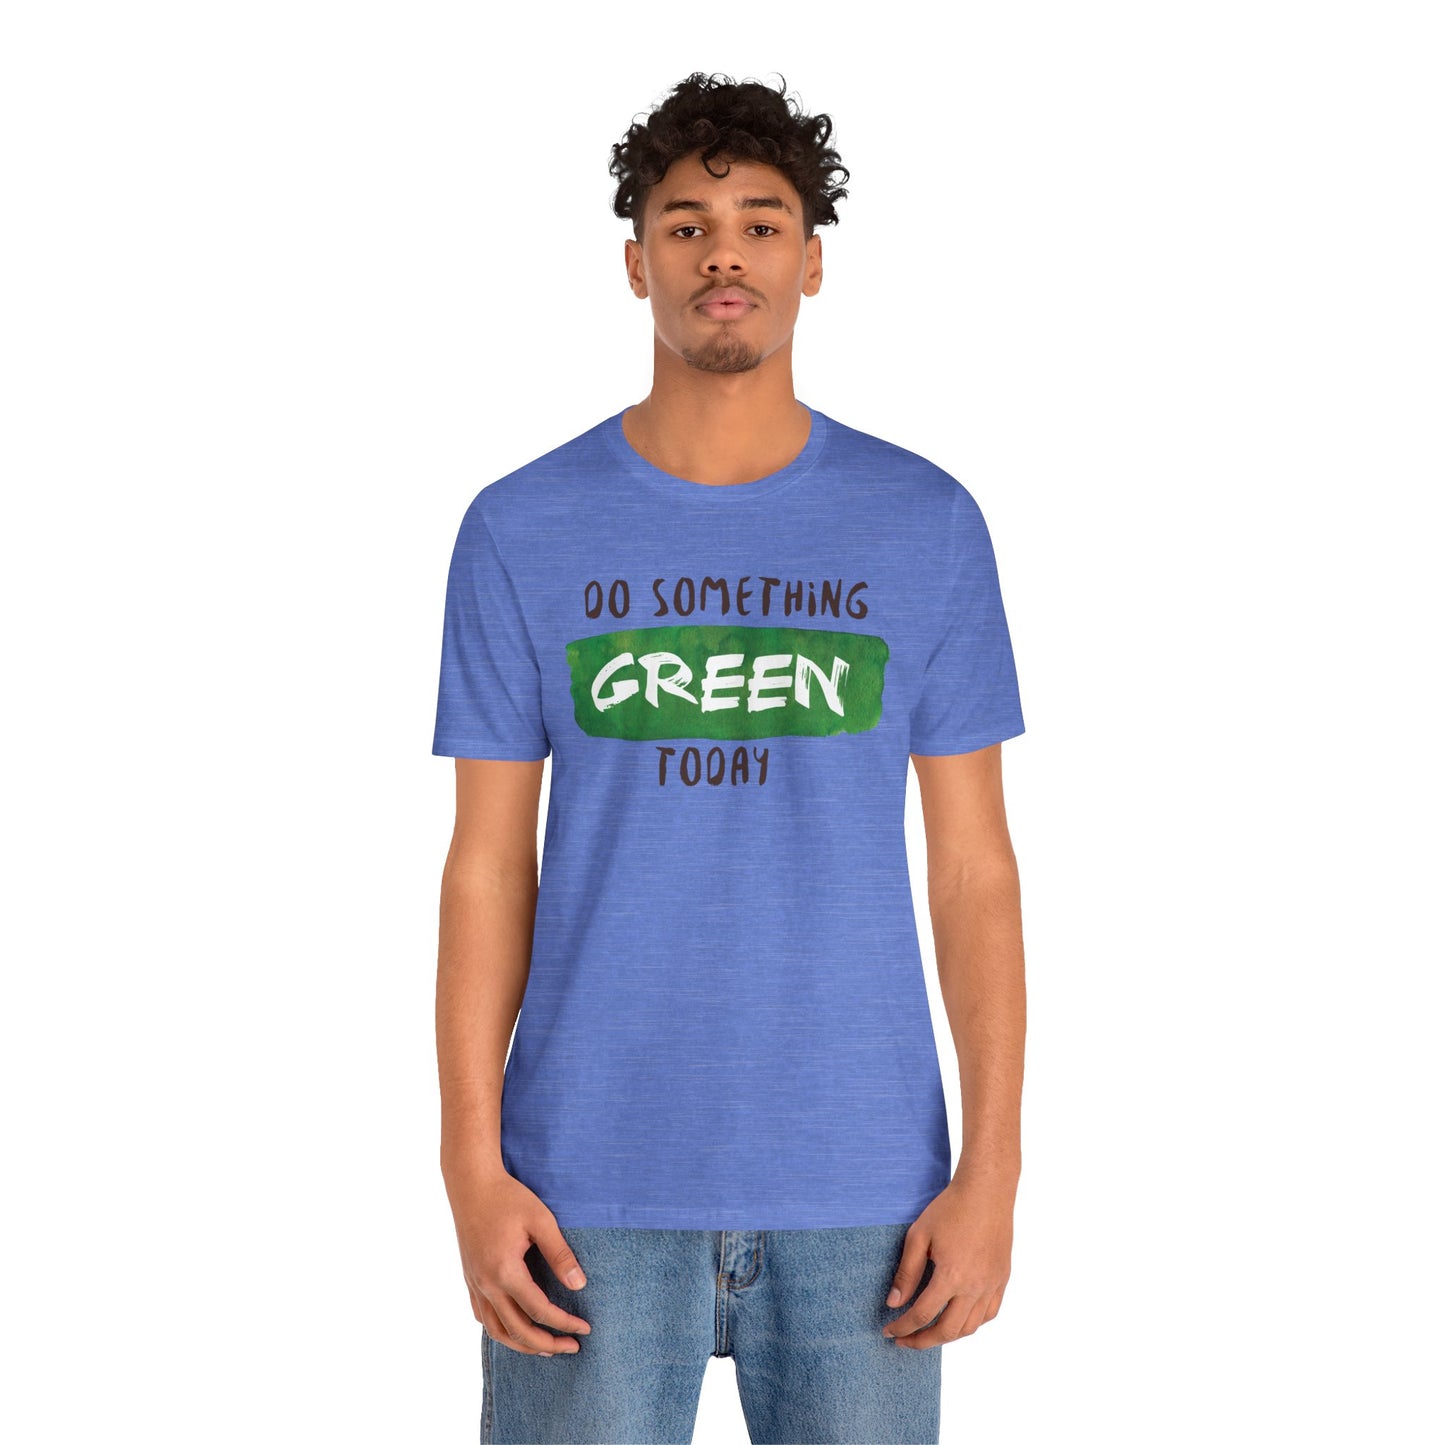 Do Something Green Today Inspirational Quote Short Sleeve T-Shirt - Unisex - Motivational Treats